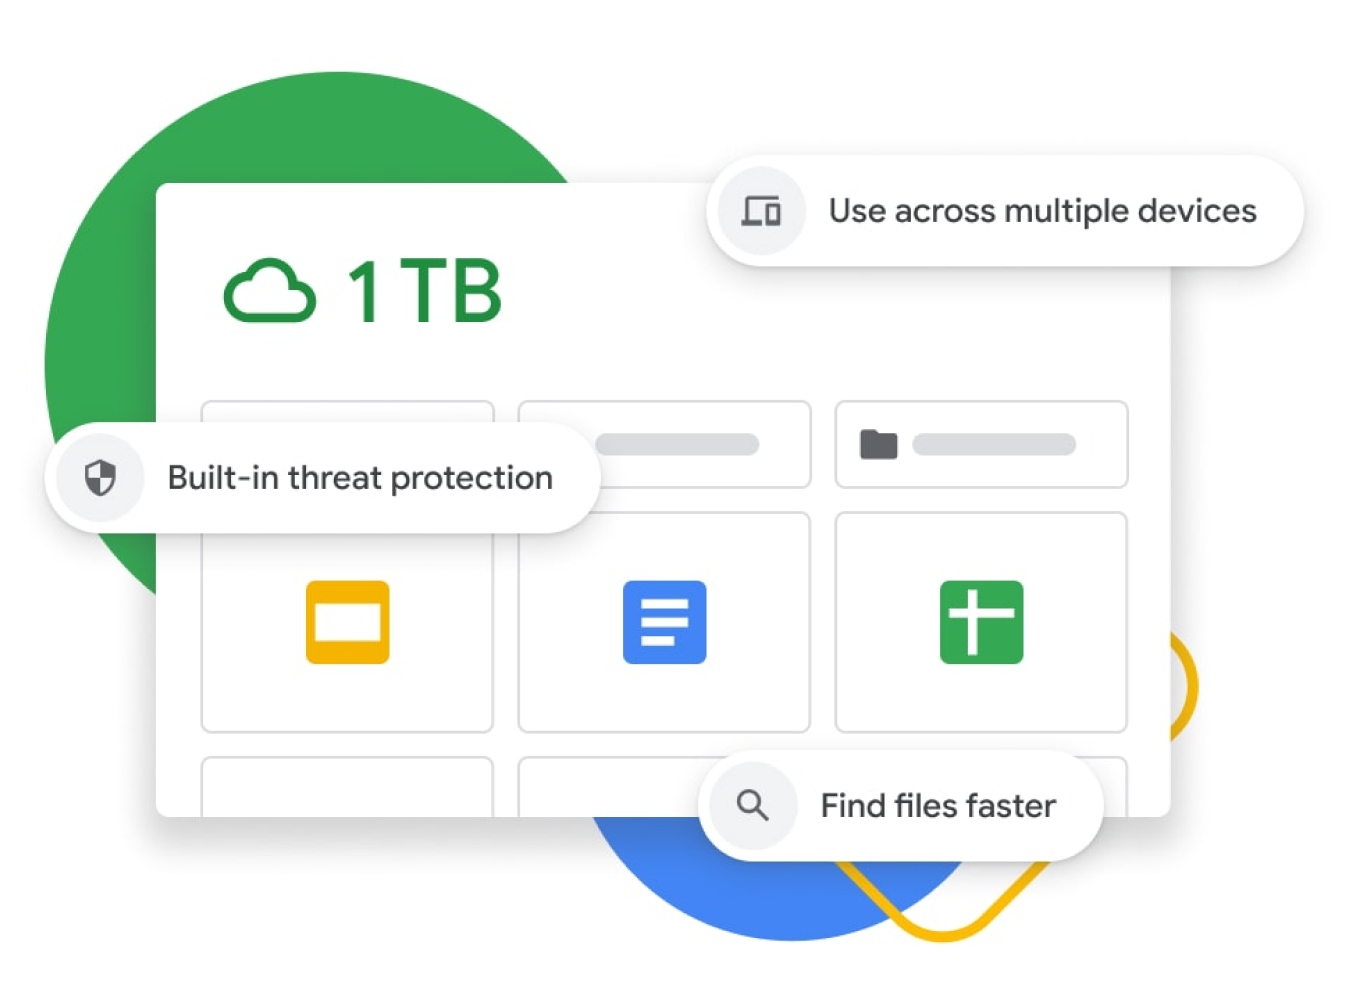 1TB의 저장용량, 내장된 위협 방지 기능, 여러 기기 동기화, 향상된 검색 기능을 갖춘 Google Drive 대시보드를 그래픽으로 나타낸 것입니다. 